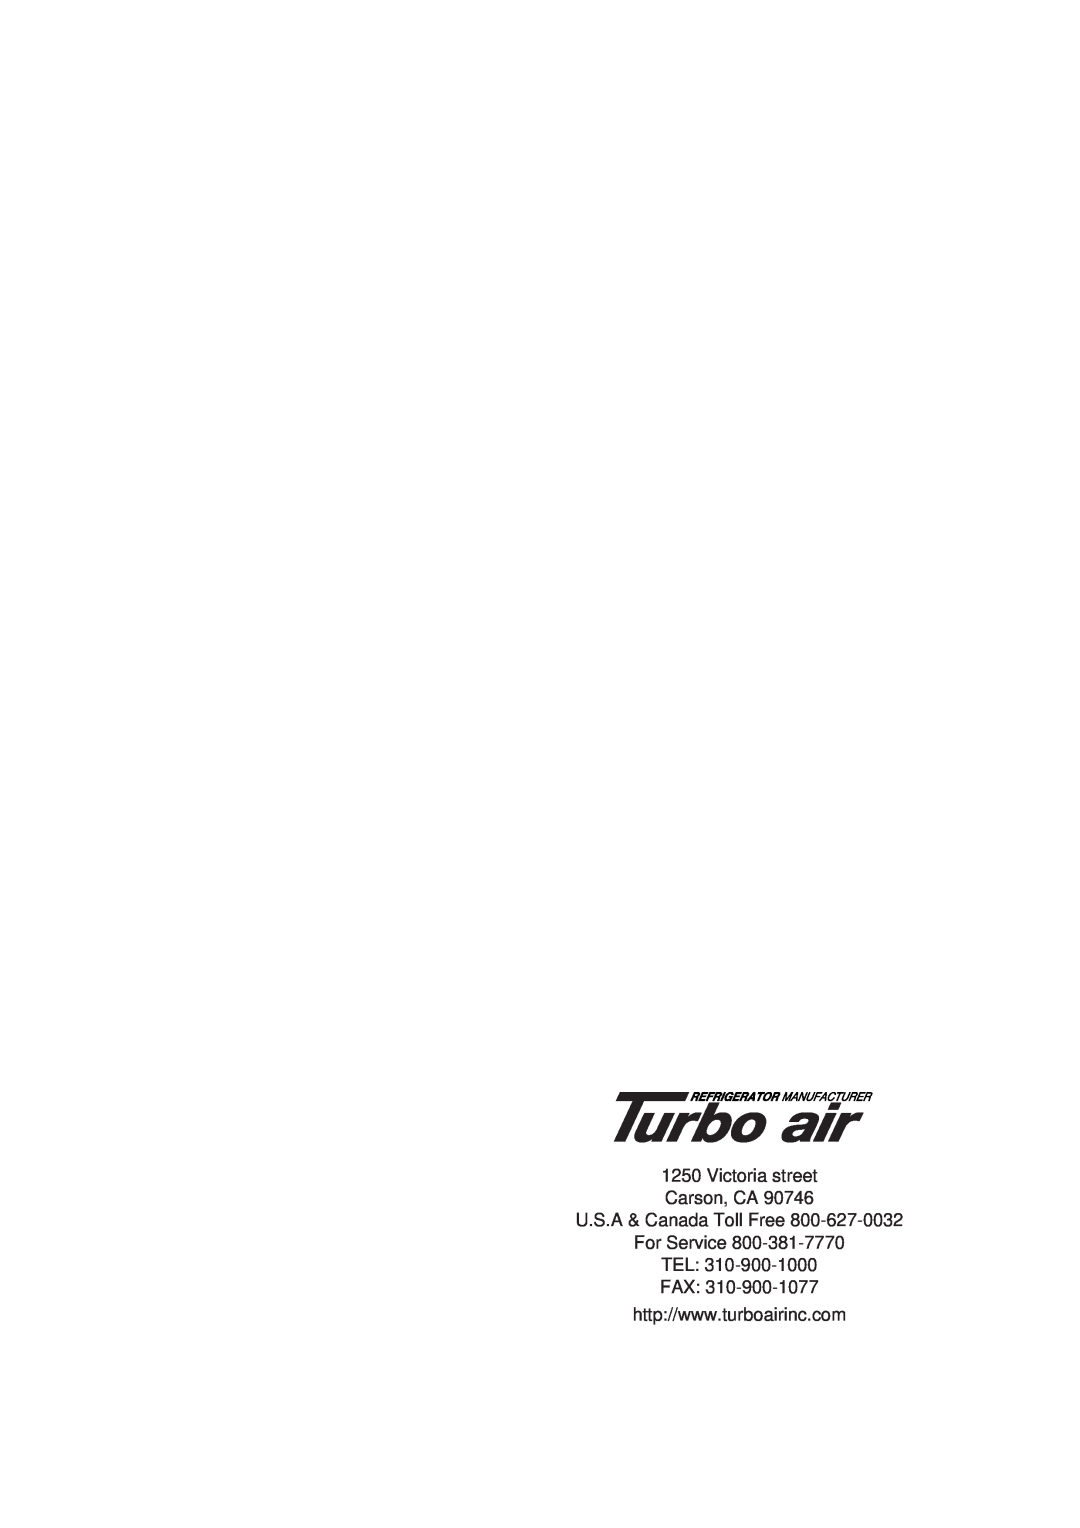 Turbo Air TBC-50SD, 50SB, TBC-24SD, 24SB Victoria street Carson, CA U.S.A & Canada Toll Free For Service, Tel Fax 